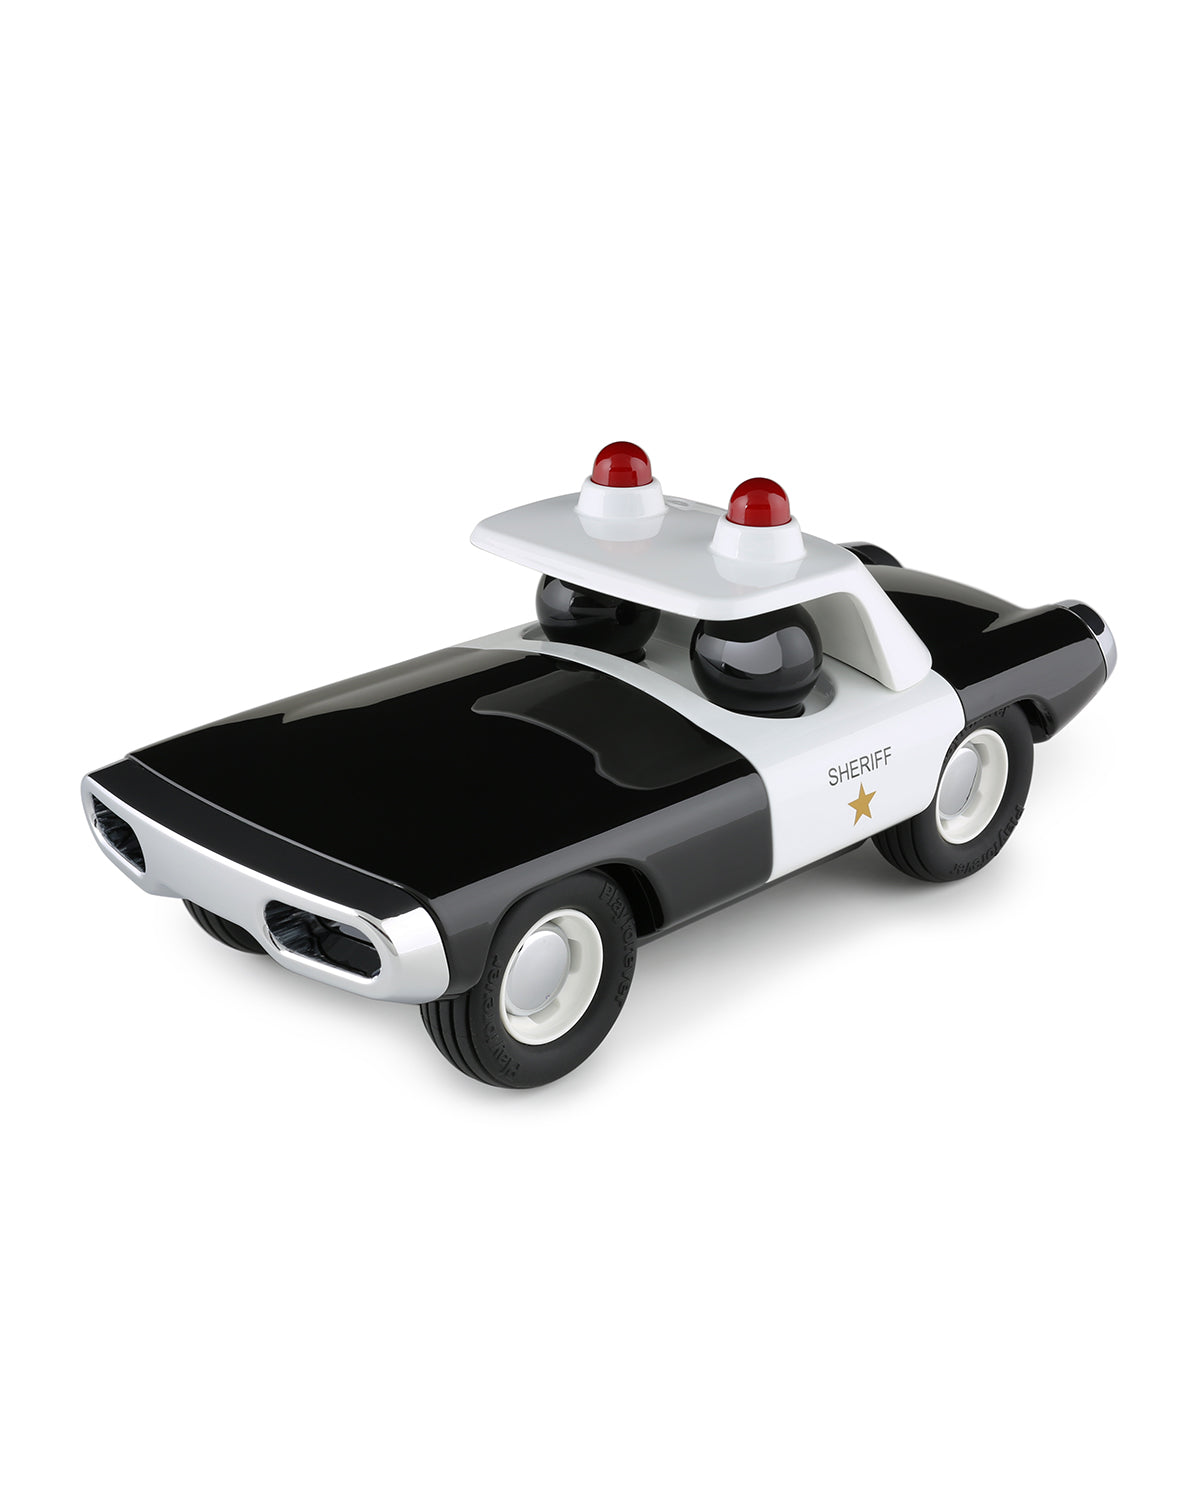 Playforever Toy Car MAVERICK HEAT SHERIFF Black/White